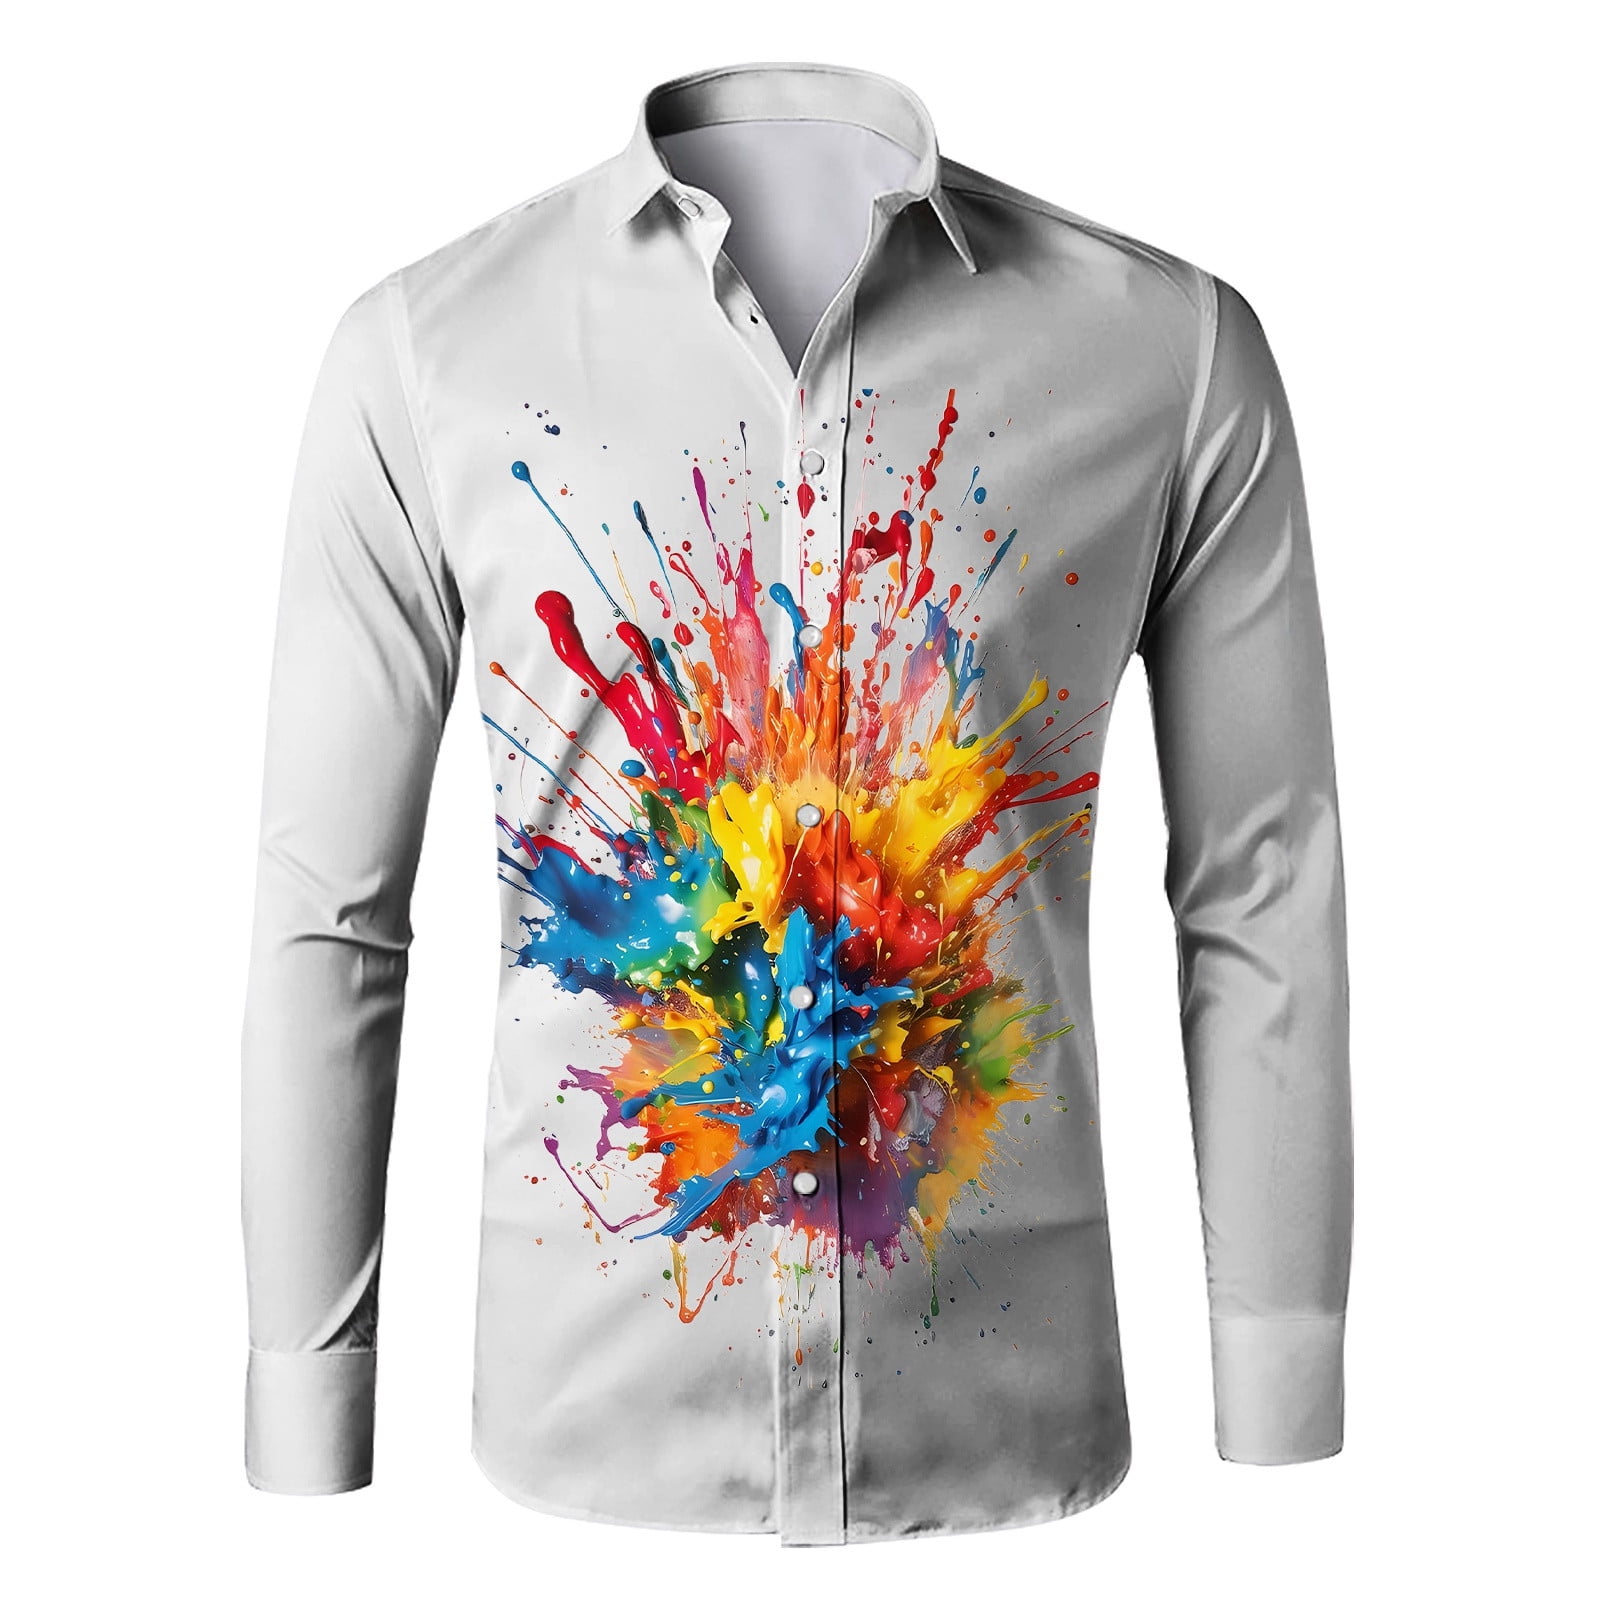 SZXZYGS Shirts for Men Graphic Tees Rappers Men's 3D Digital Print ...